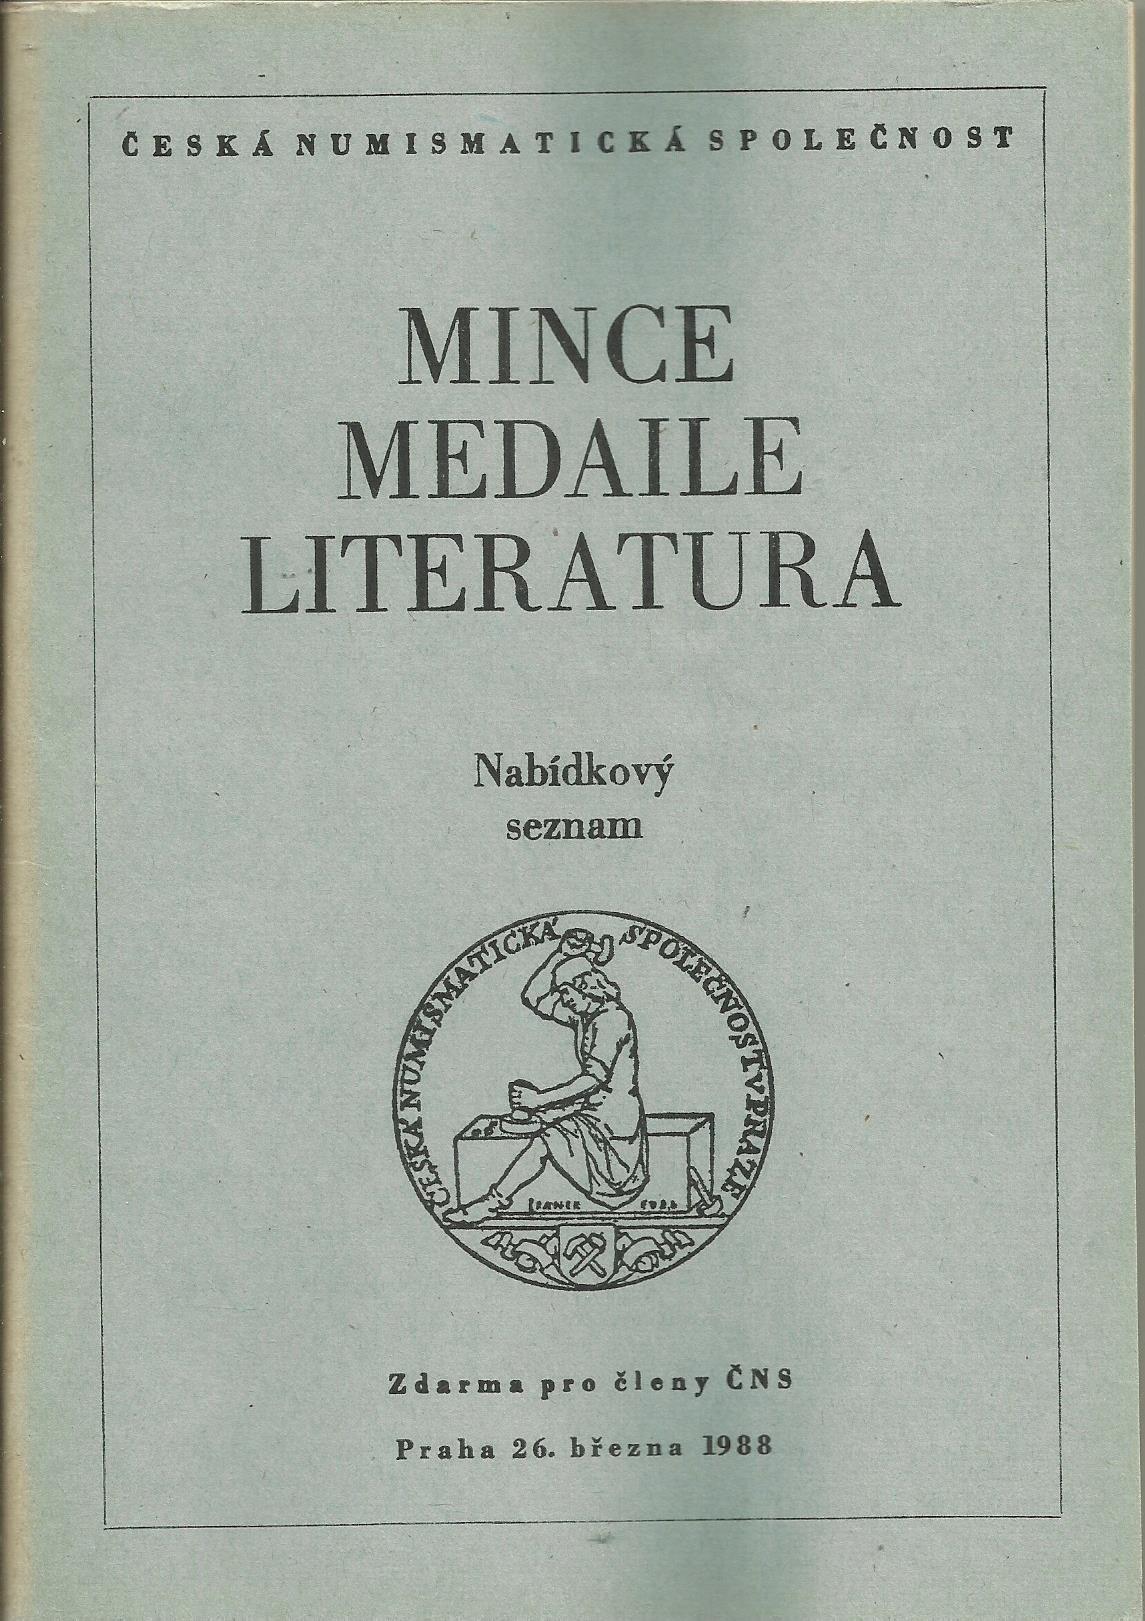 Mince, medaile, literatura - březen 1988